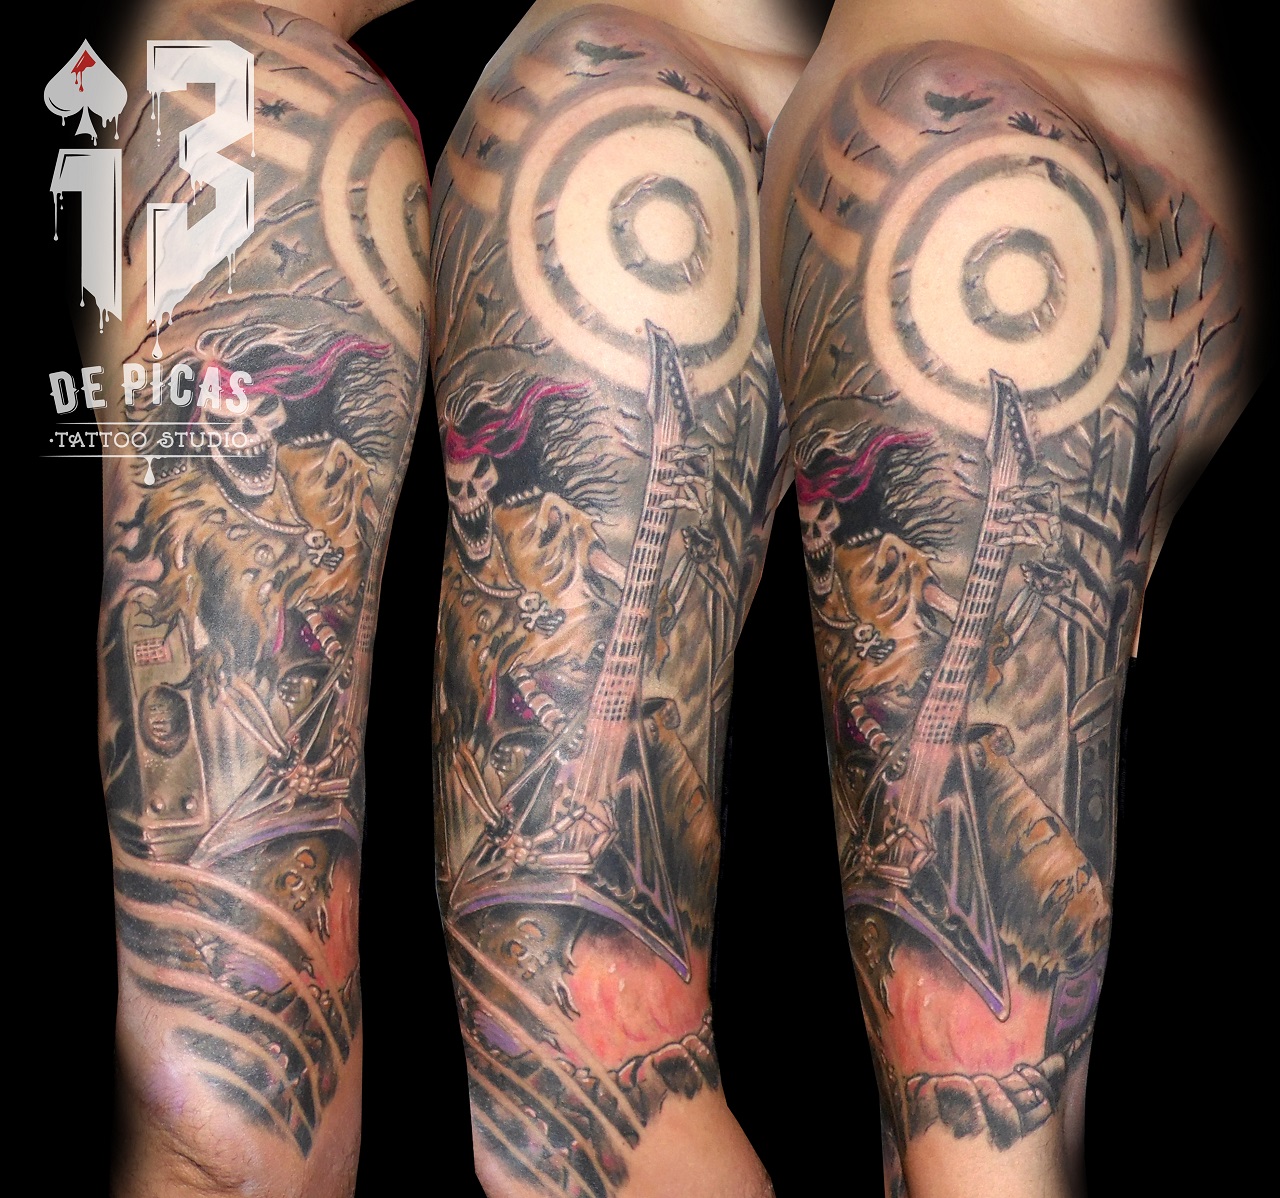 heavy metal tattoo skull tatuajes huesca jaca tattoo 13depicas trecedepicas spain españa tatuadores ilustracion